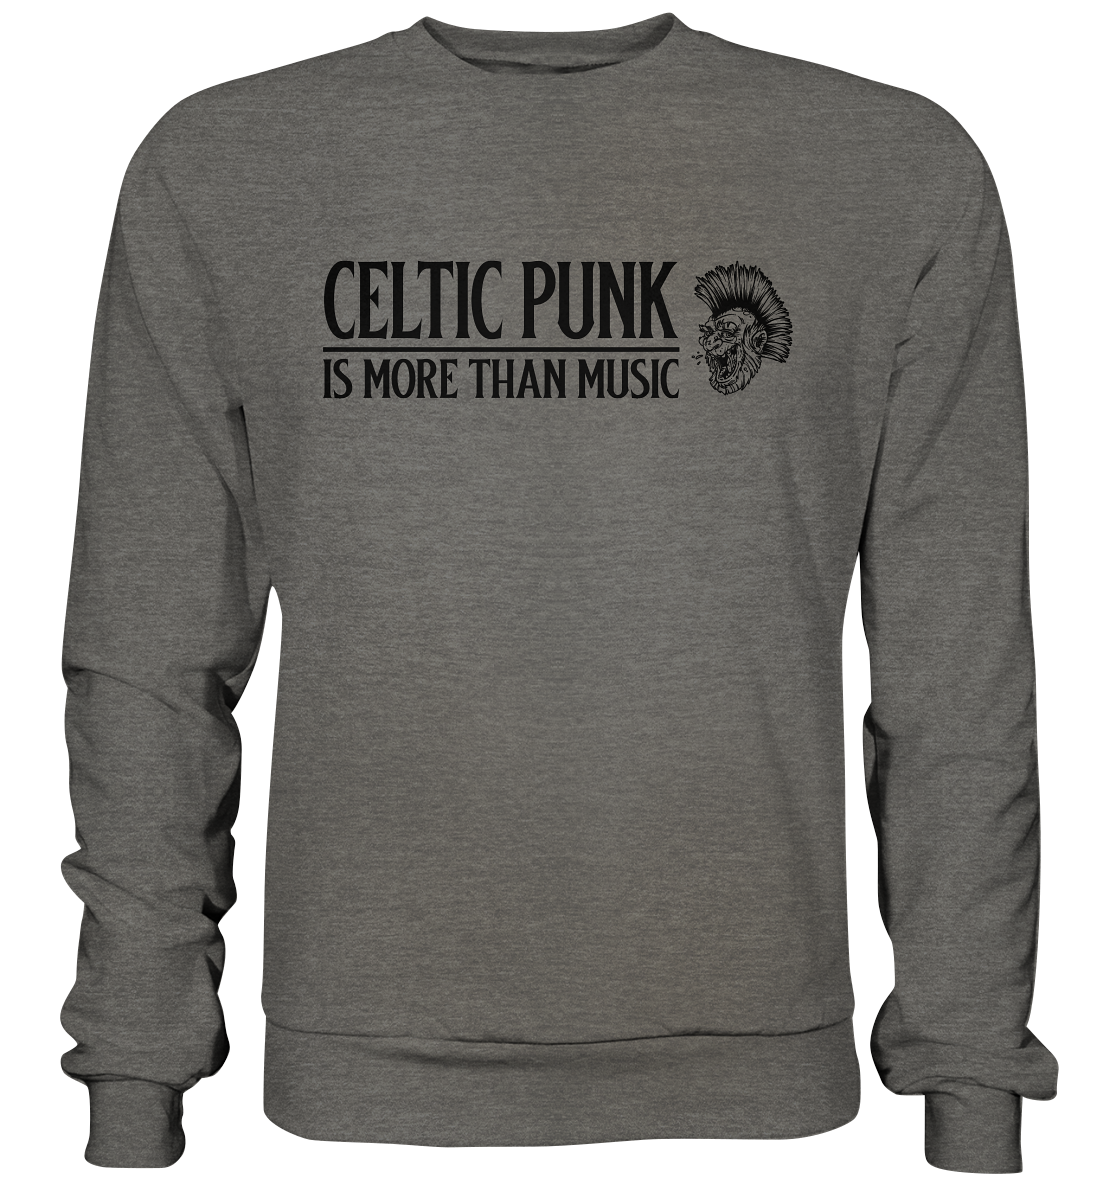 Celtic Punk "Is More Than Music" - Basic Sweatshirt